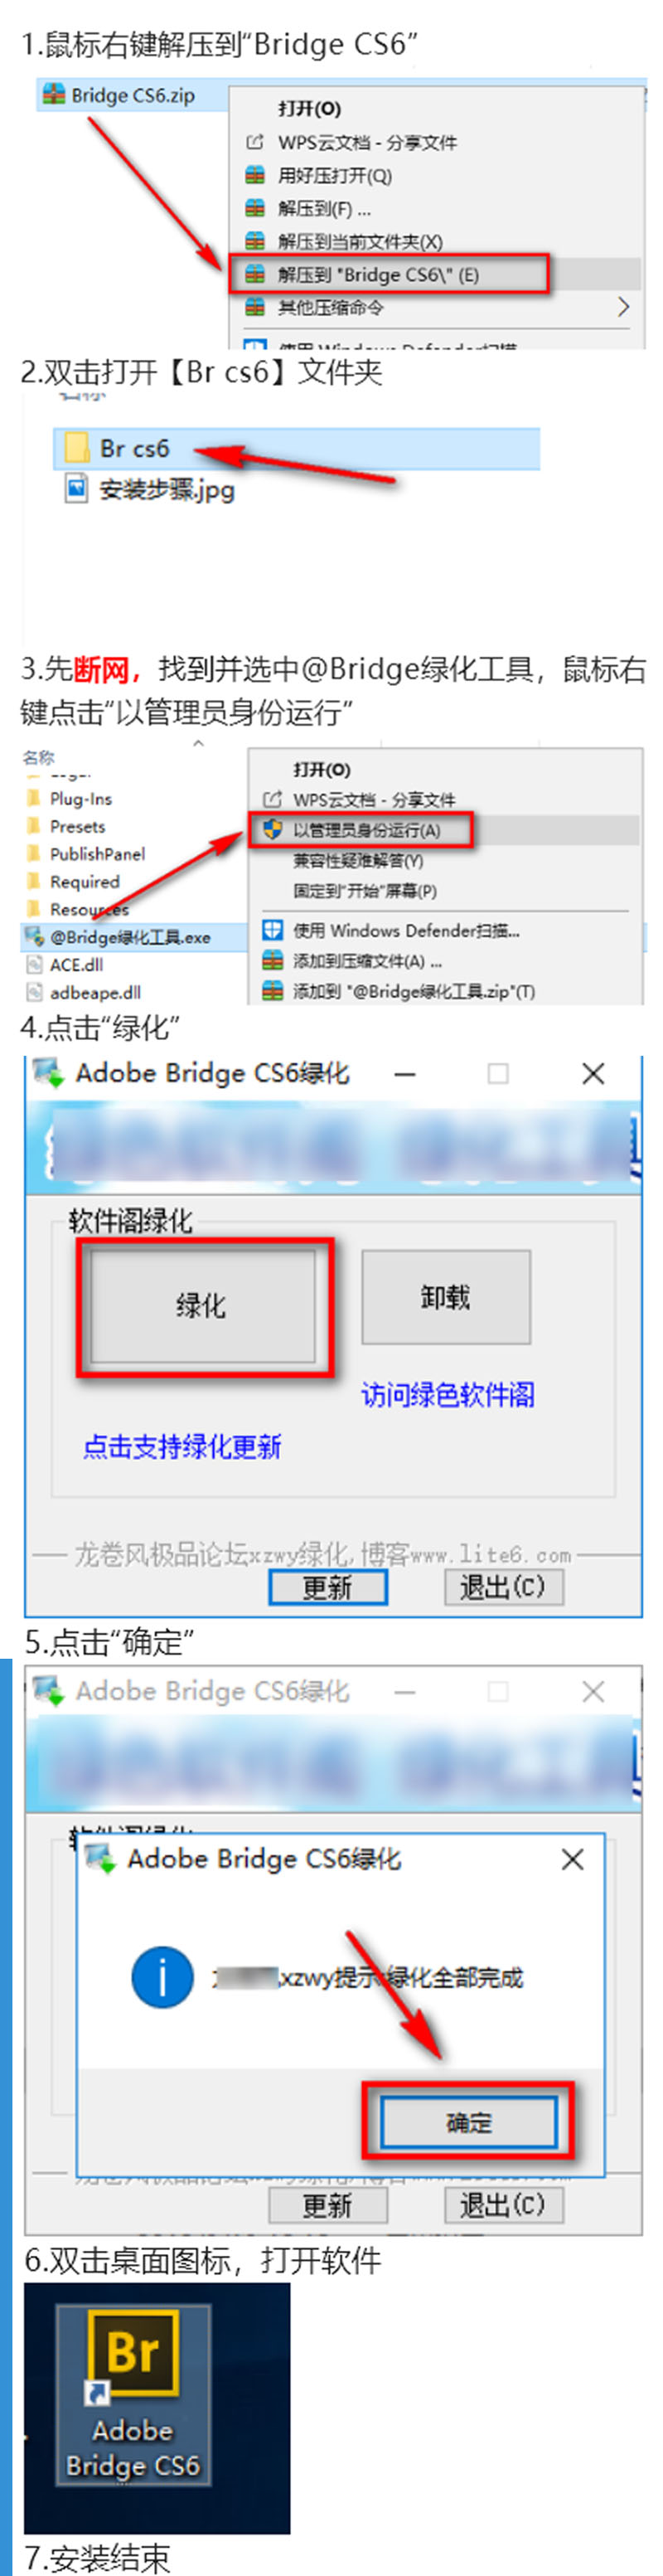 Adobe Bridge CS6װ̳.jpg